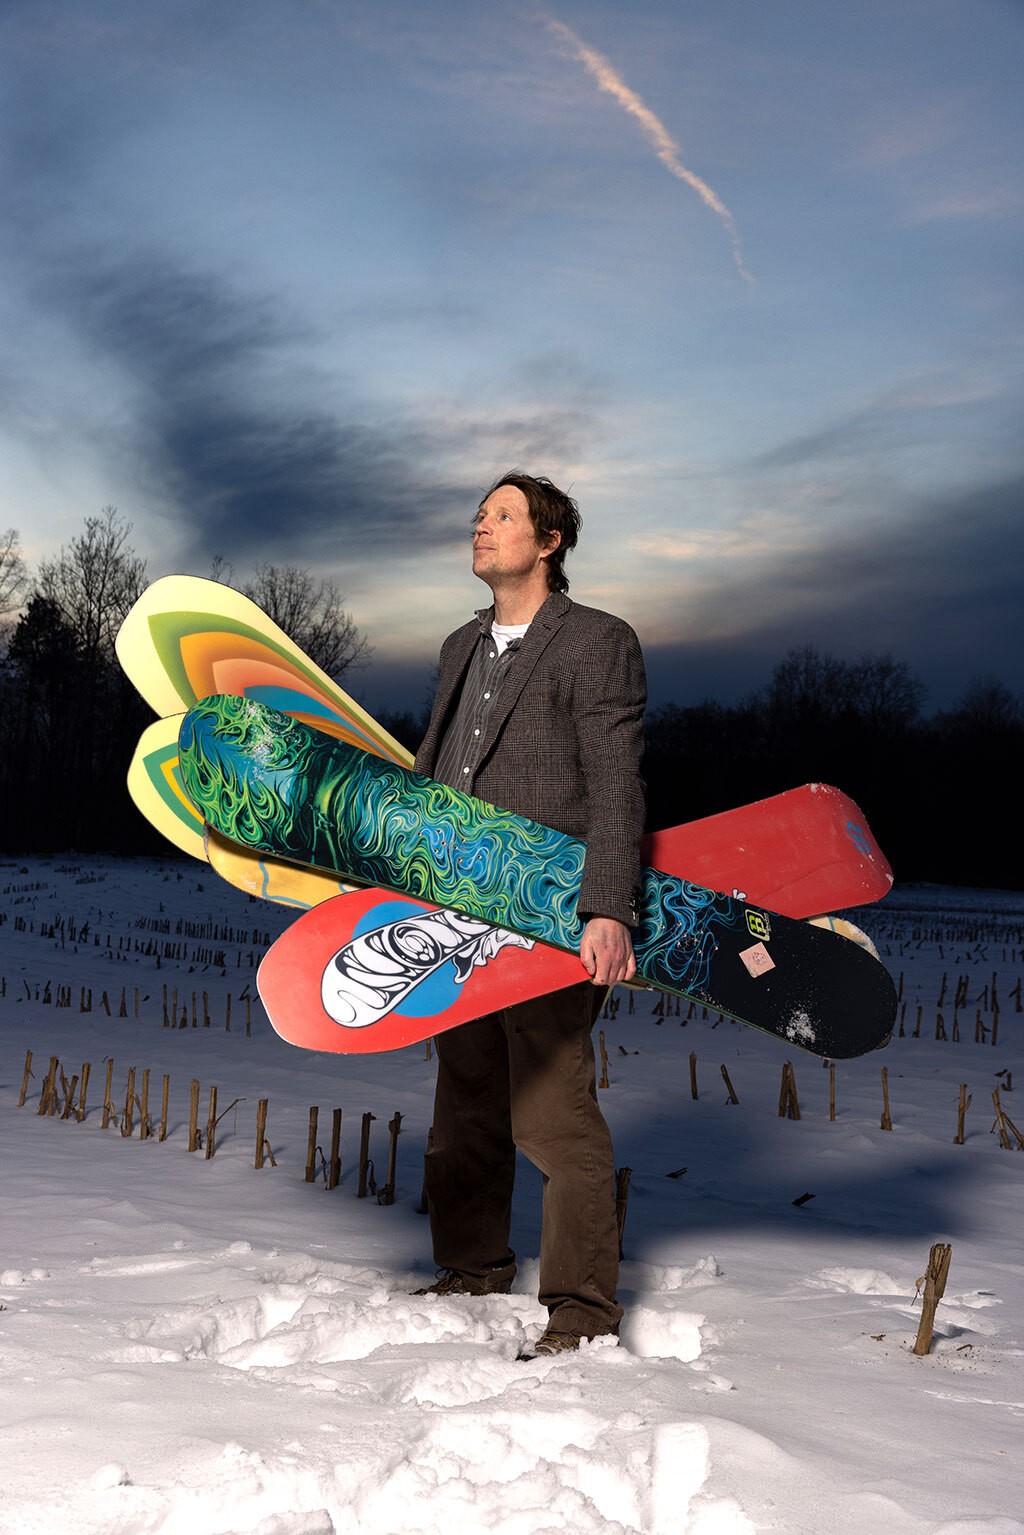 A Burton Snowboards Exhibit Spotlights Artist Scott Lenhardts Rad Skills Visual Art Seven Days Vermonts Independent Voice